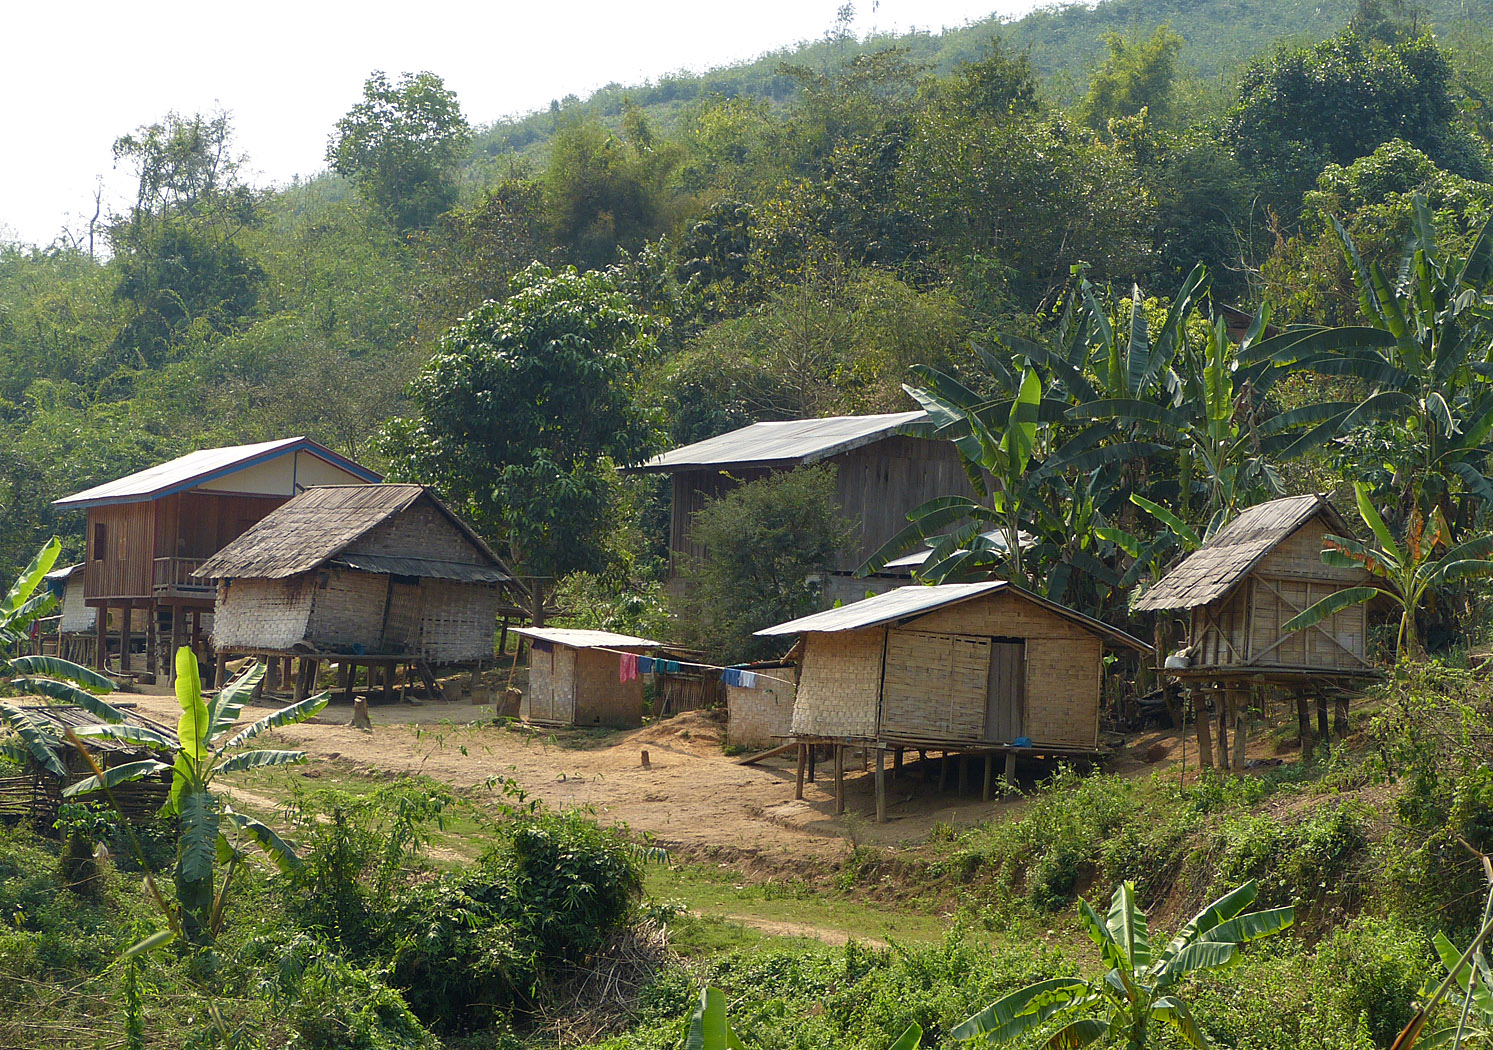 Village on Mekong River, Laos